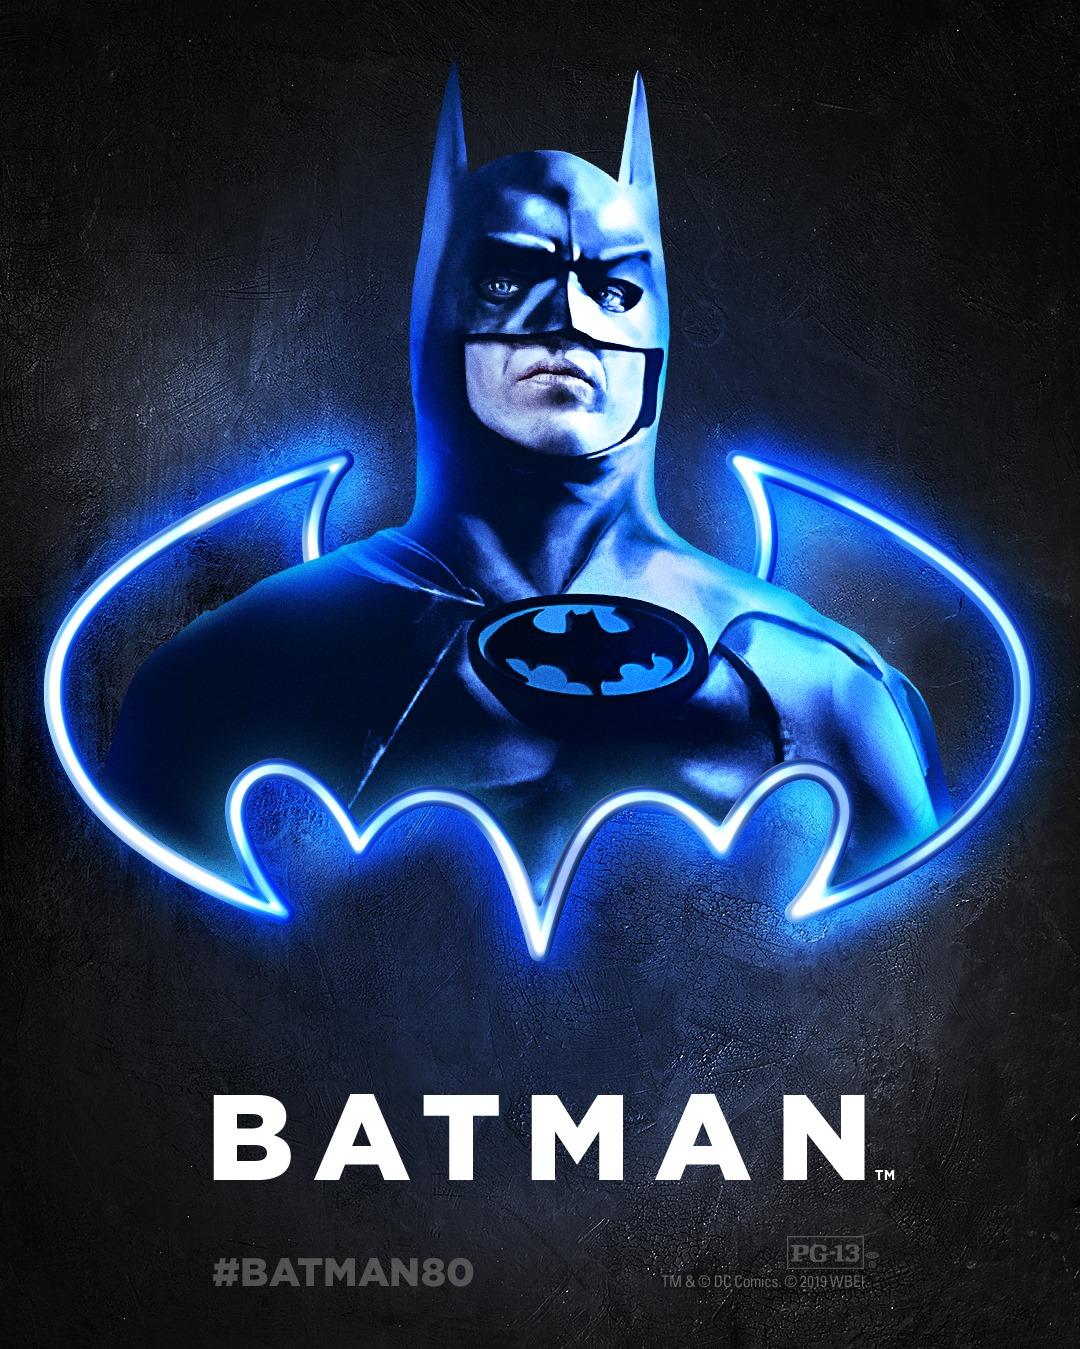 Batman In One Week Own On 4k Ultra HD Blu Ray Digital